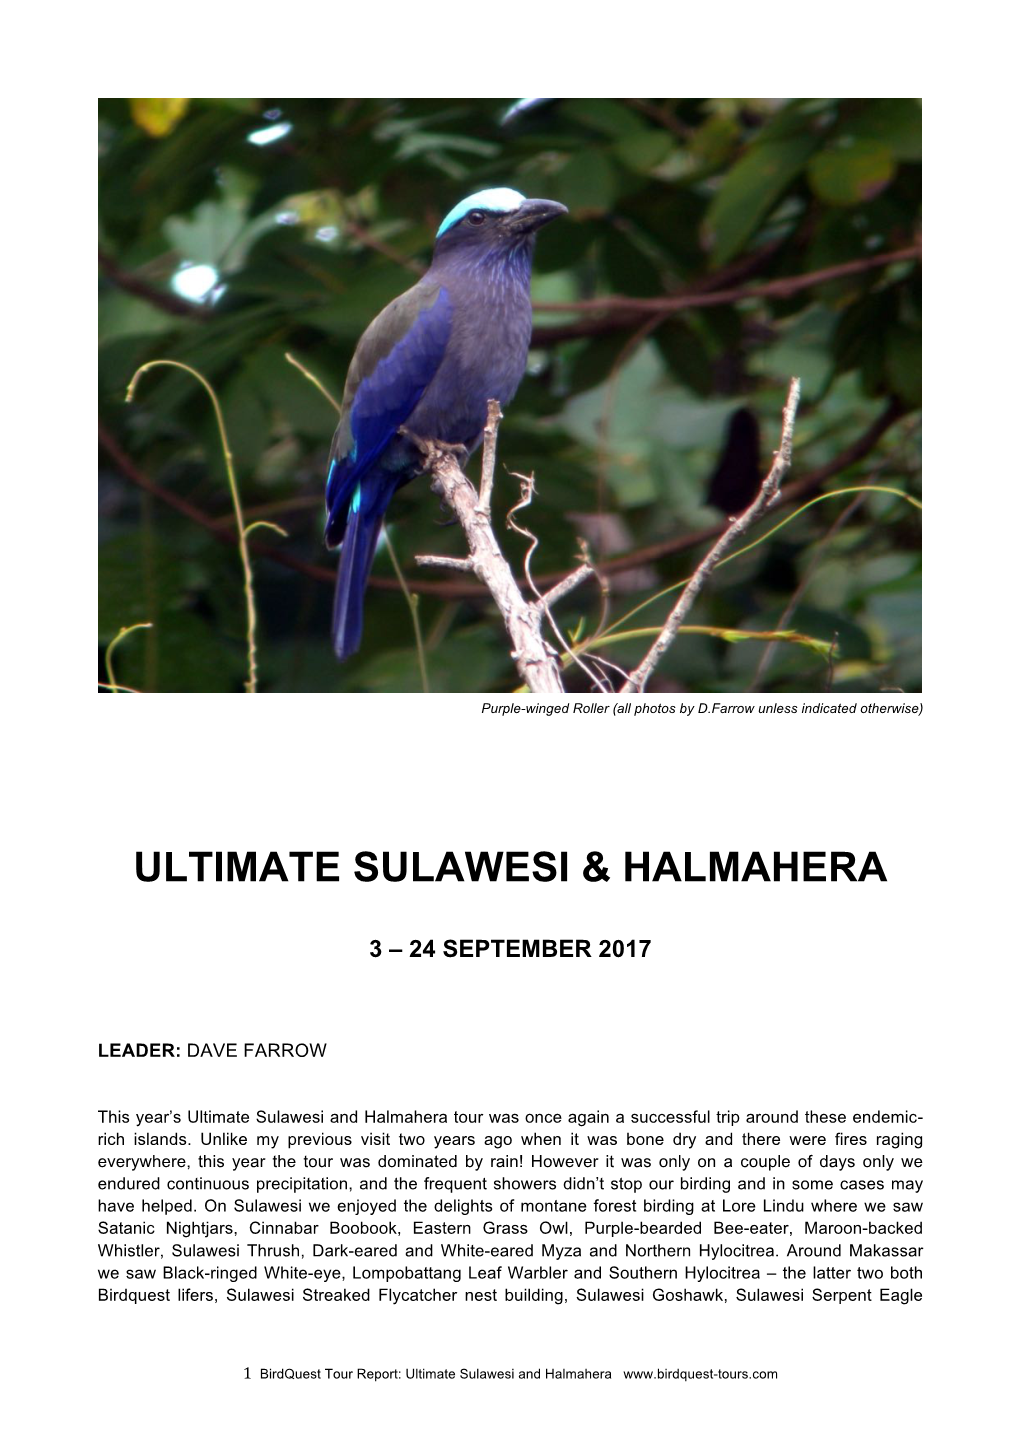 Ult. Sulawesi & Halmahera 2017 Tour Report